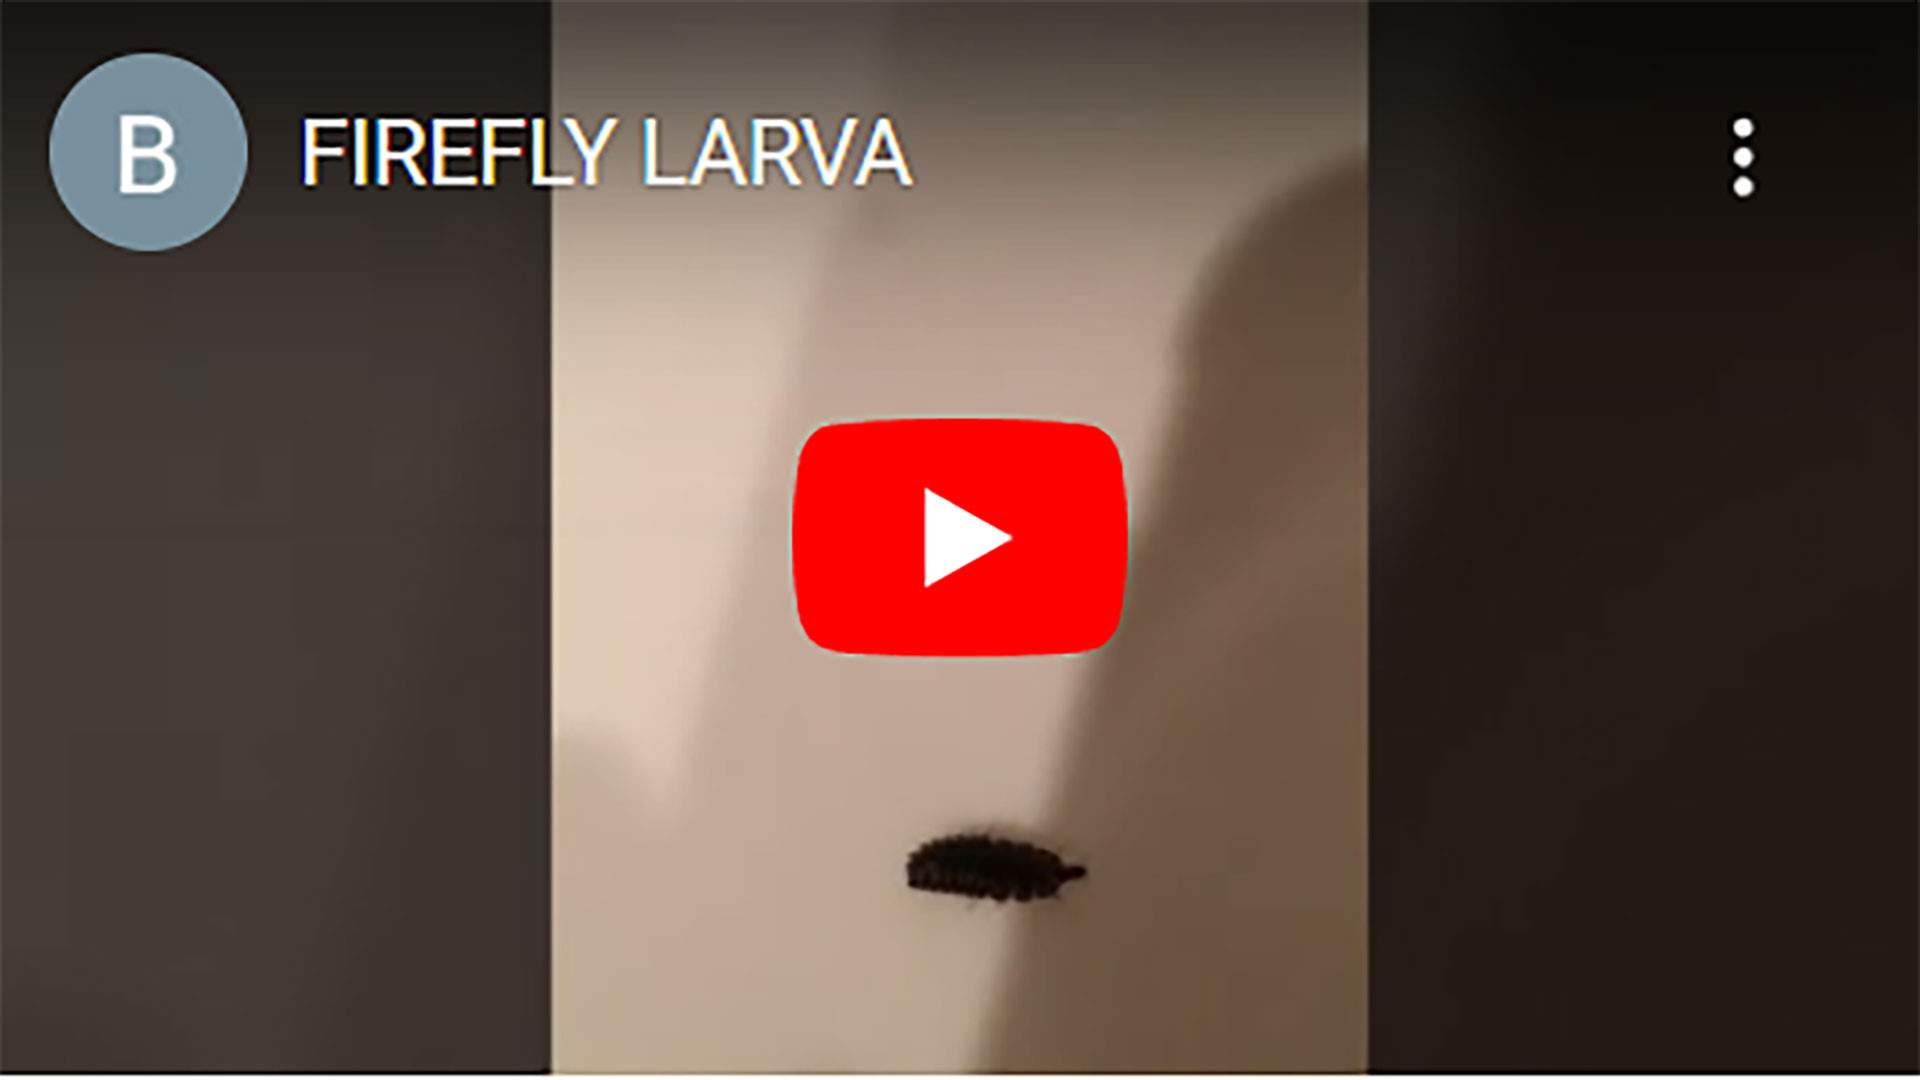 FIREFLY-LARVA